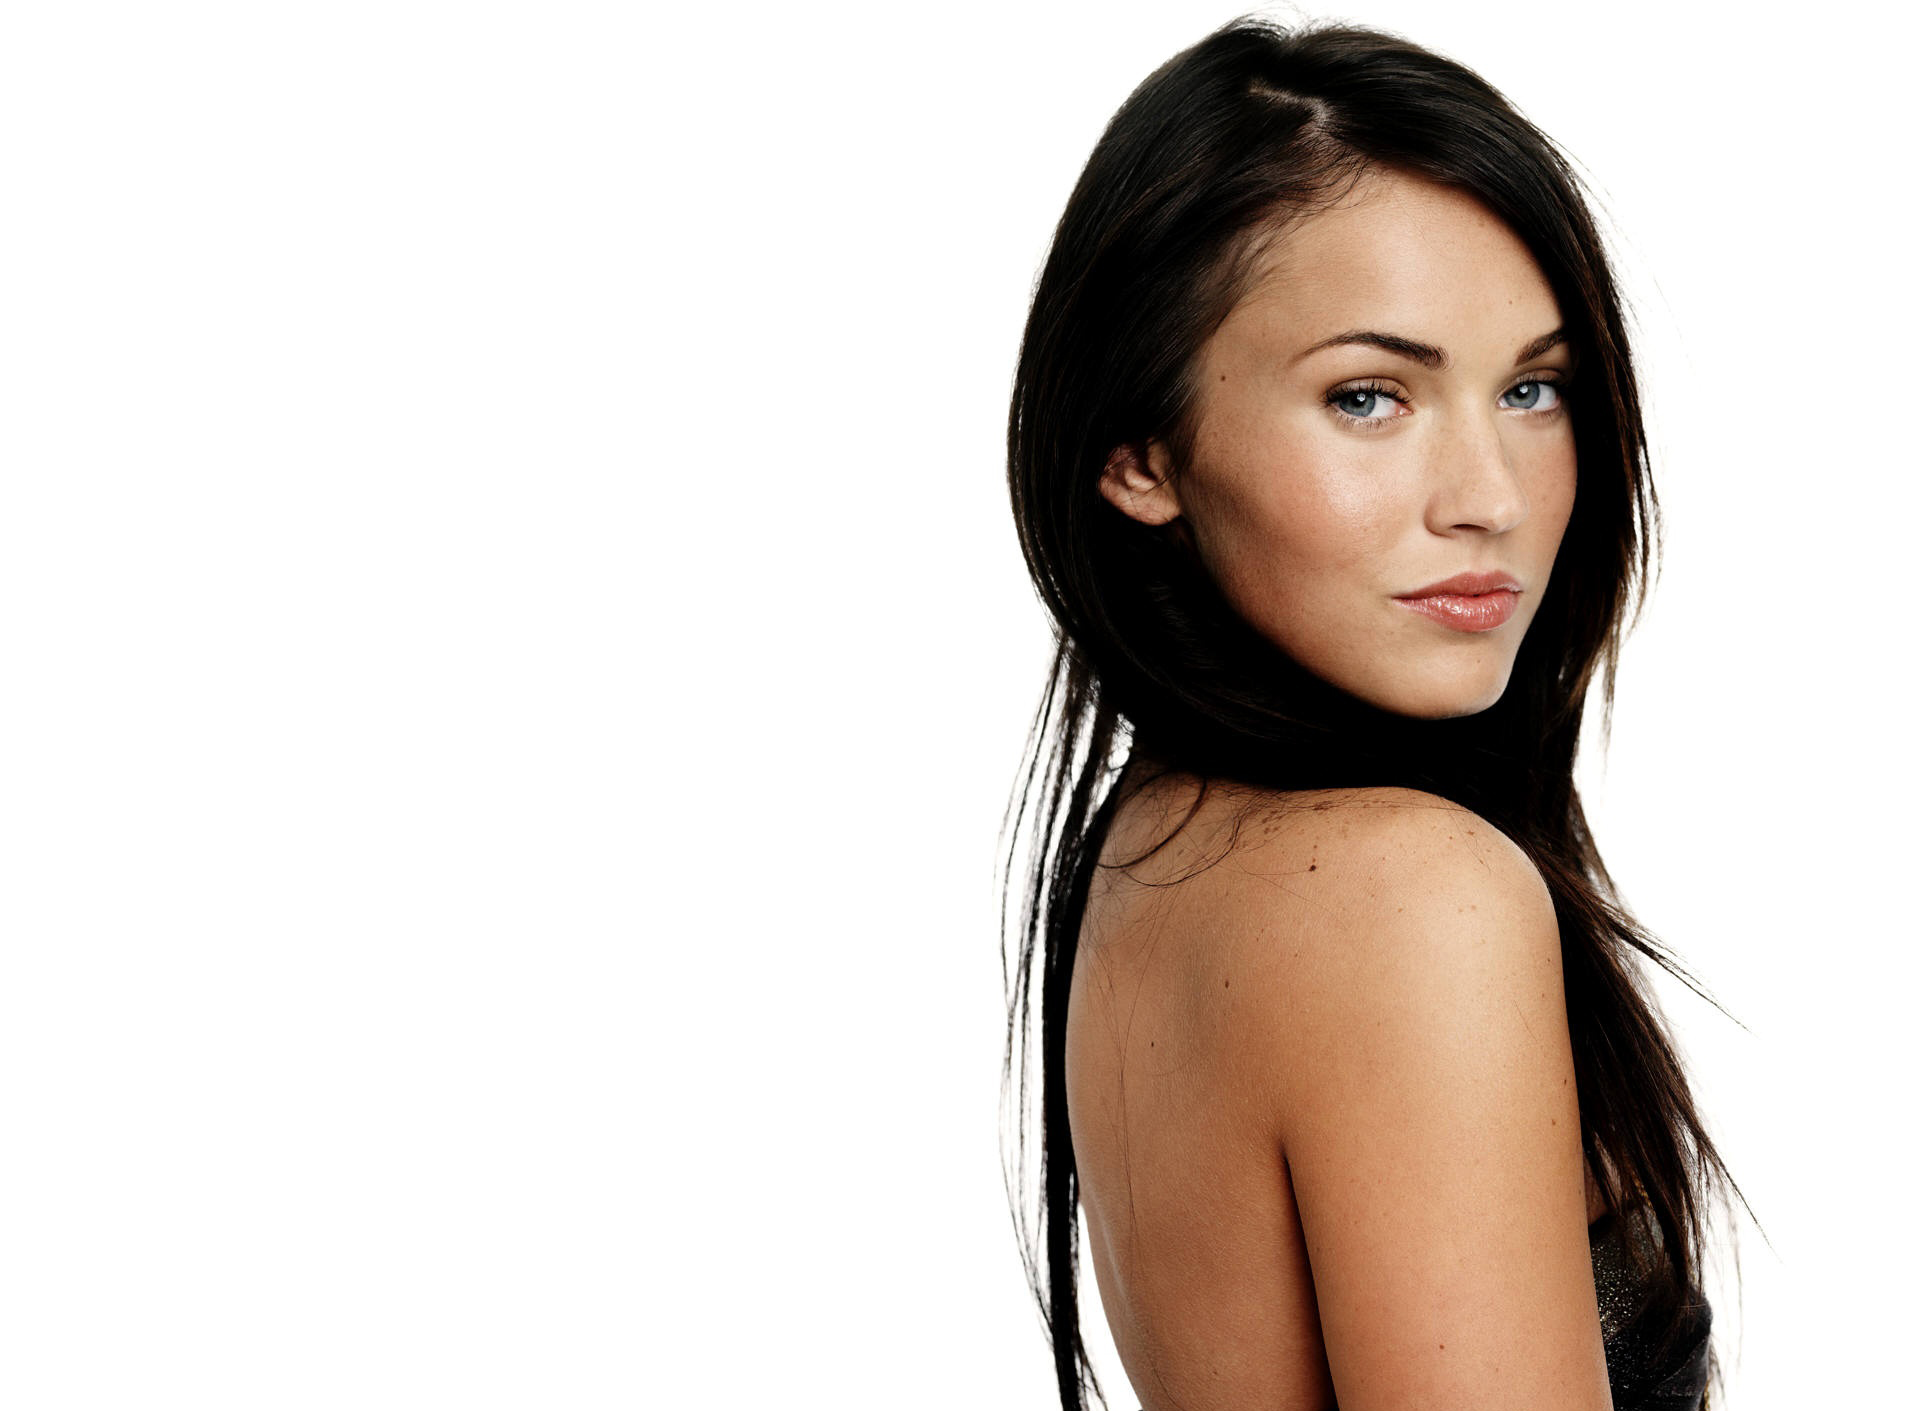 2560 X1440 Megan Fox Cute Images 1440p Resolution Wallpaper Hd Celebrities 4k Wallpapers